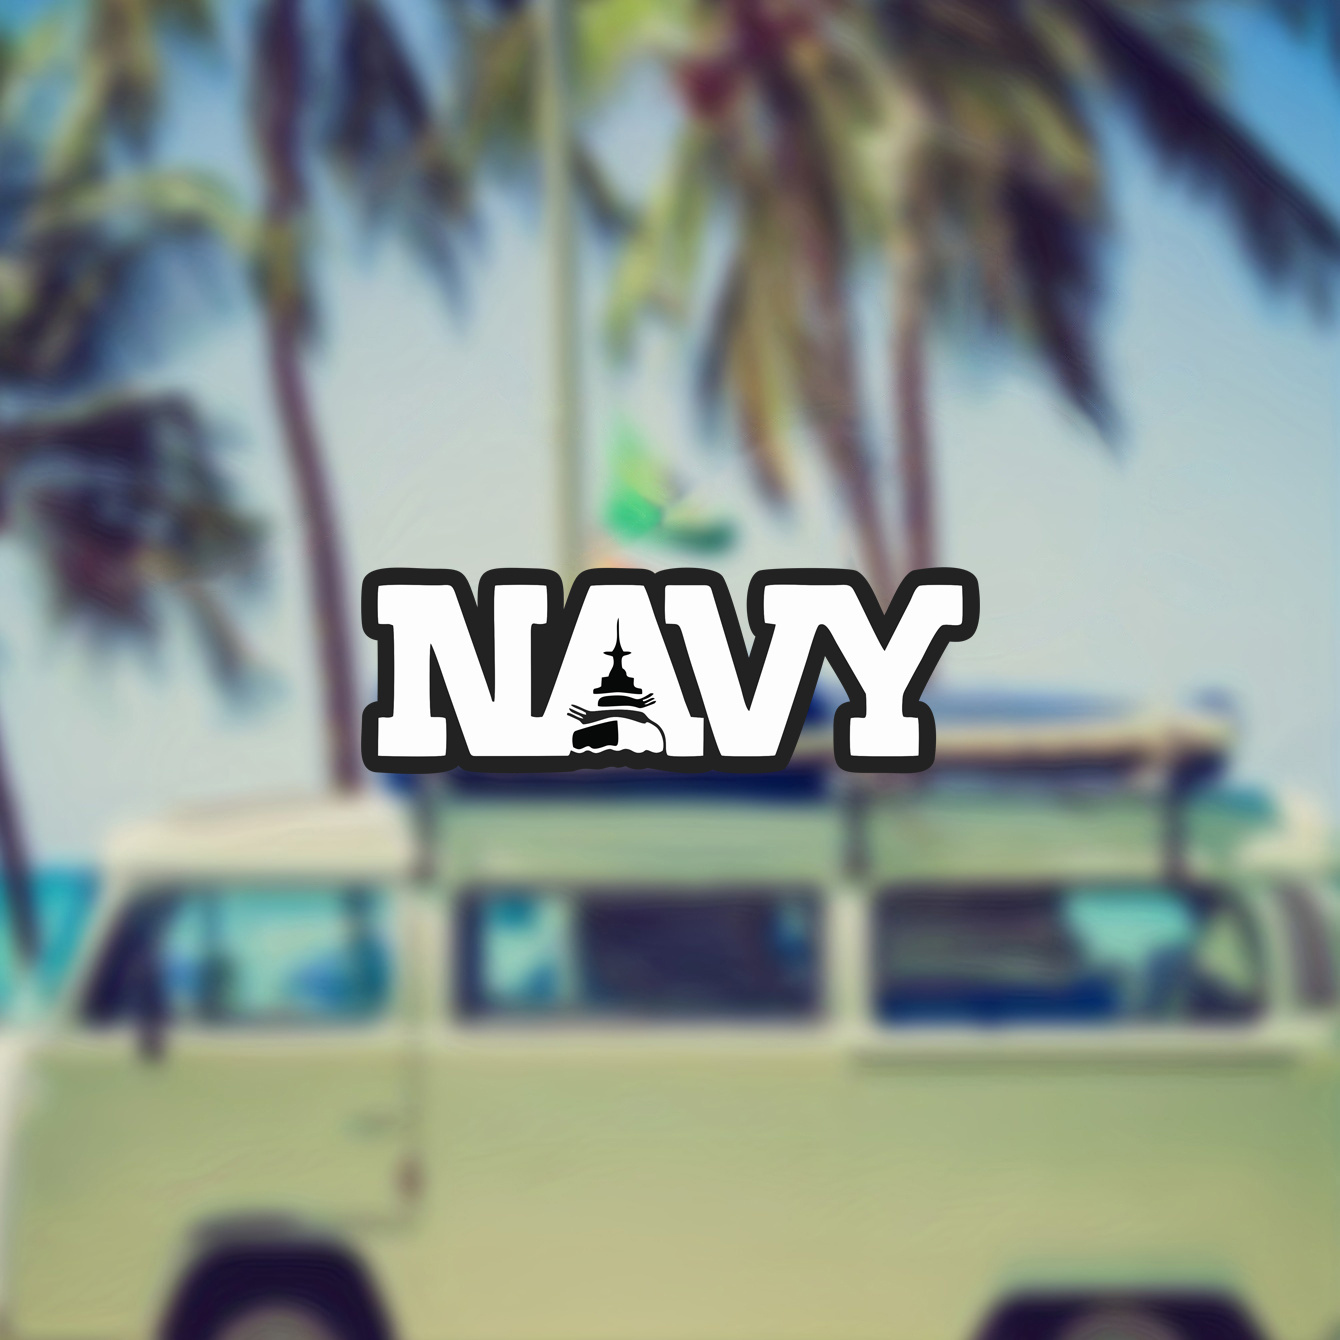 

Navy Army Ship Decal - Waterproof Car Vinyl Sticker For Vehicle, Truck, Van, Laptop, Window